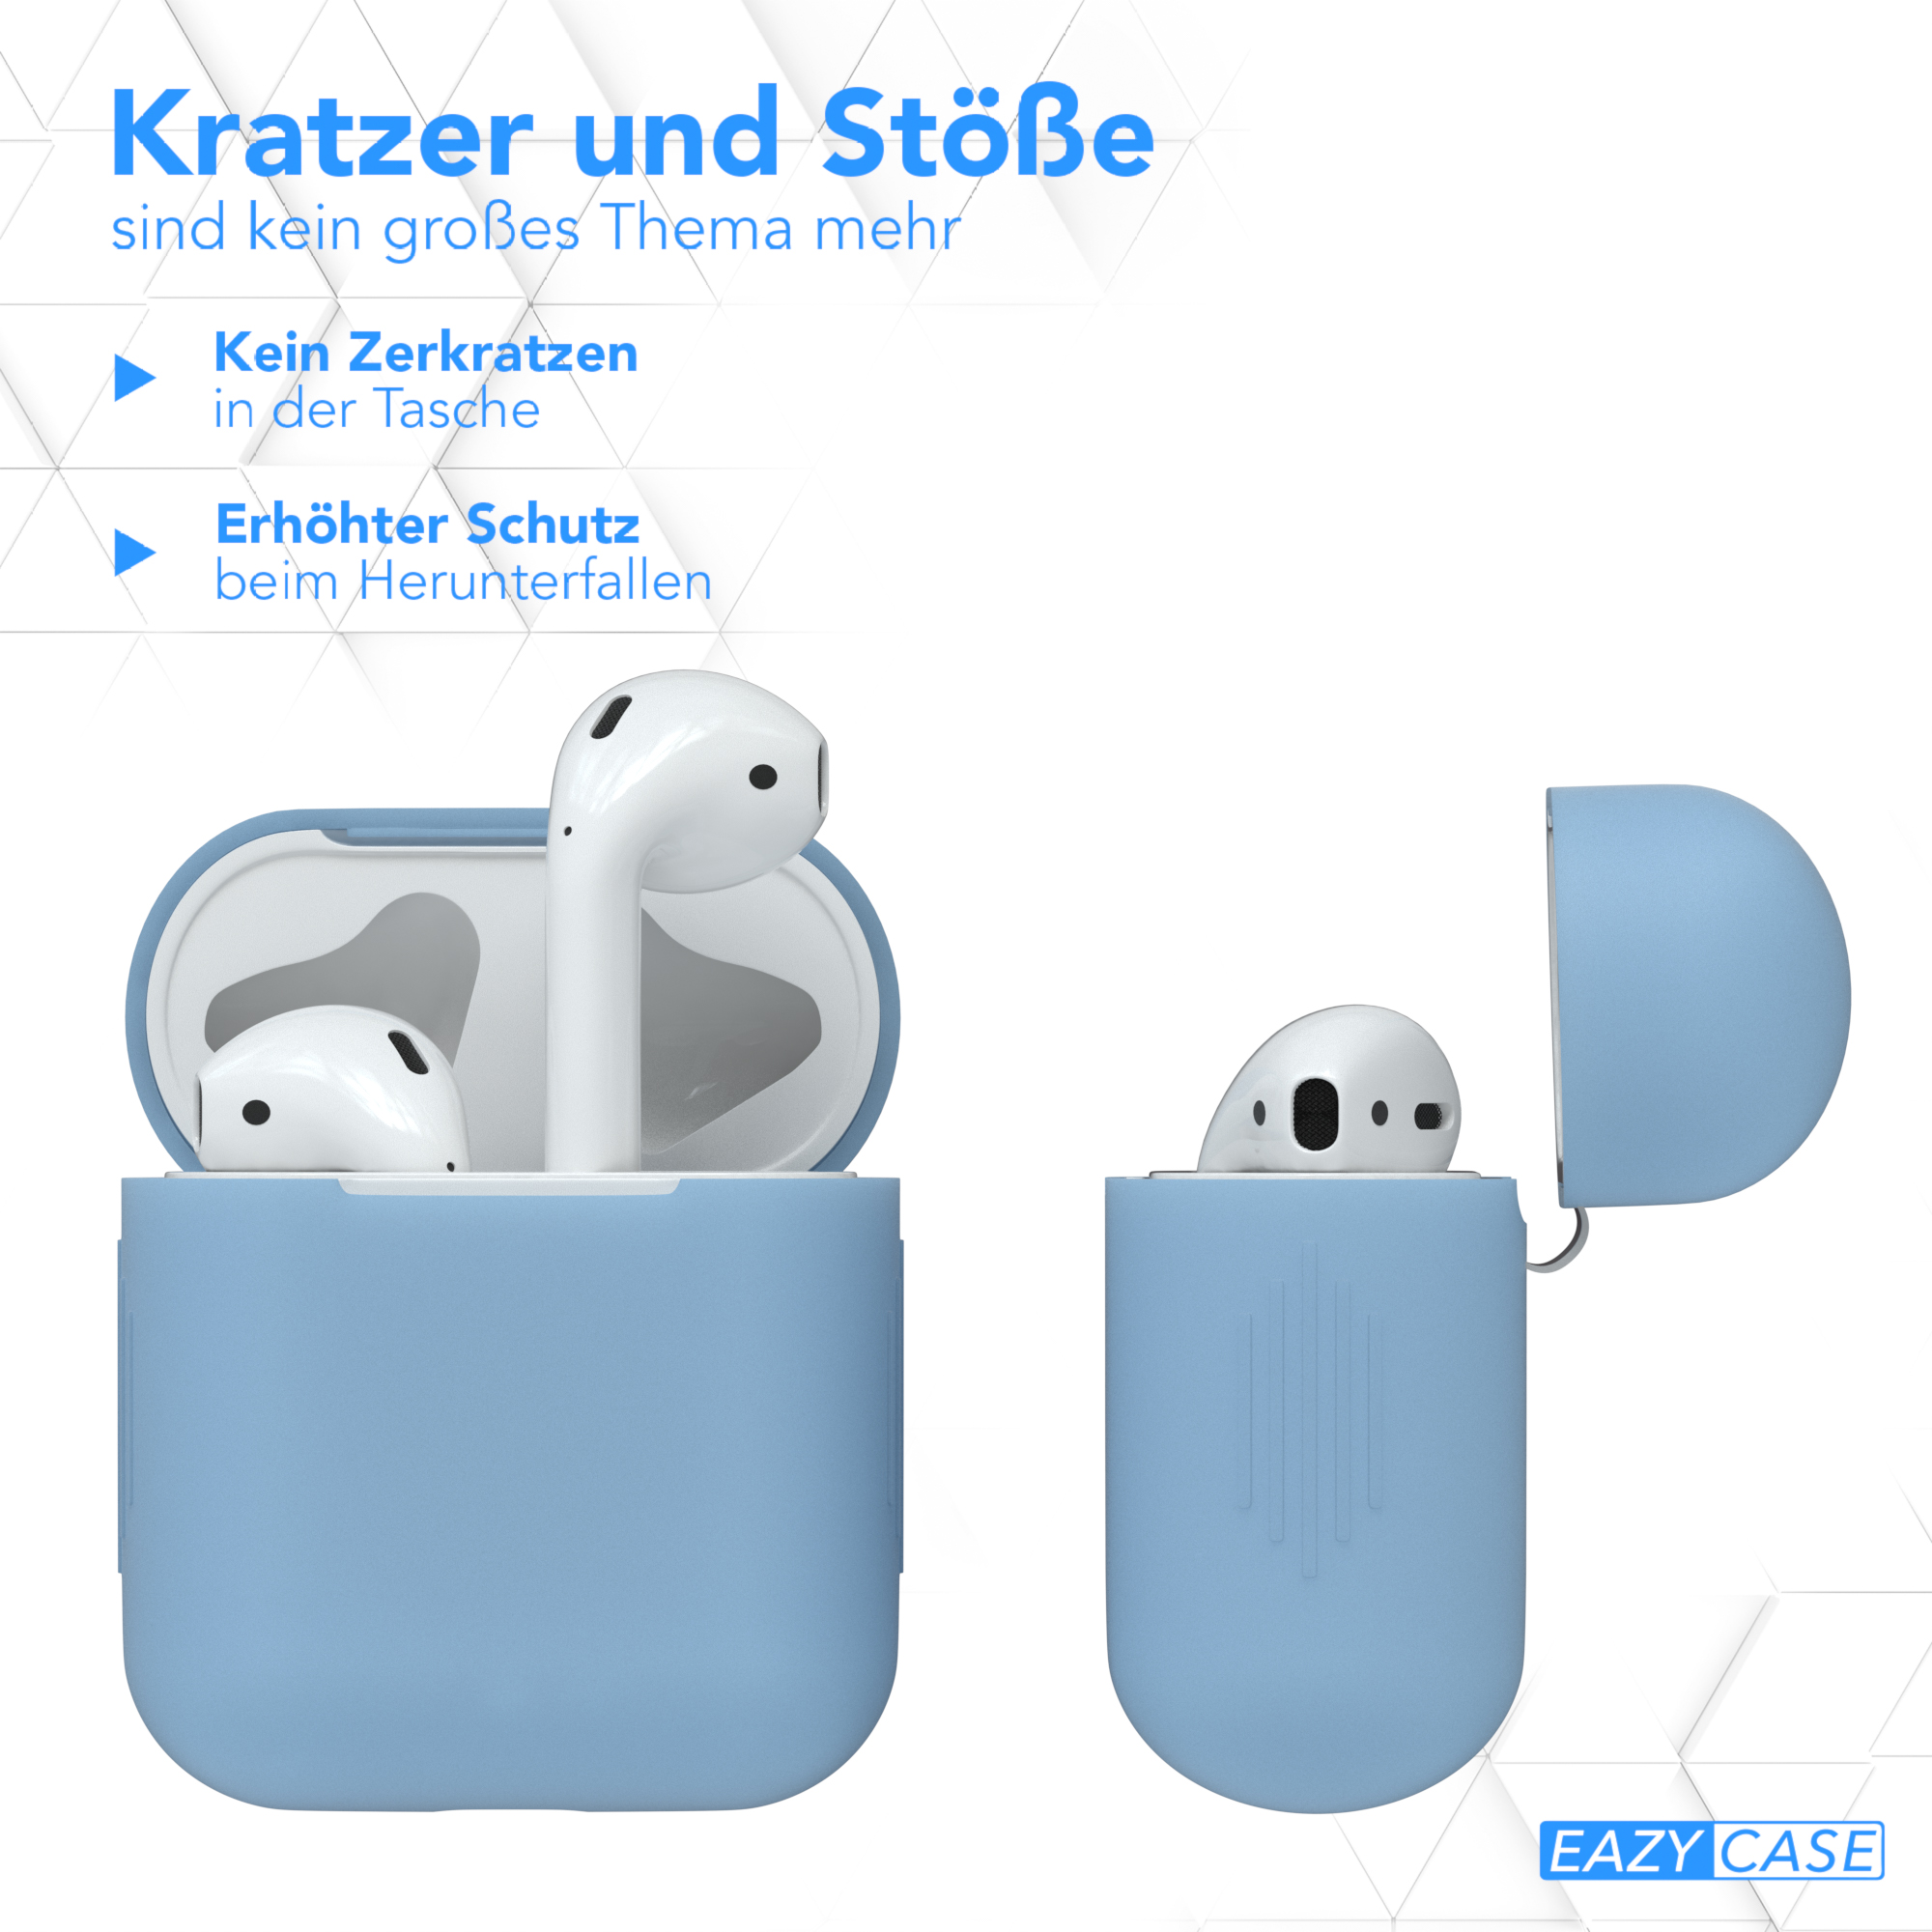 / CASE für: EAZY Blau Silikon Apple passend AirPods Case Schutzhülle Helllblau Sleeve